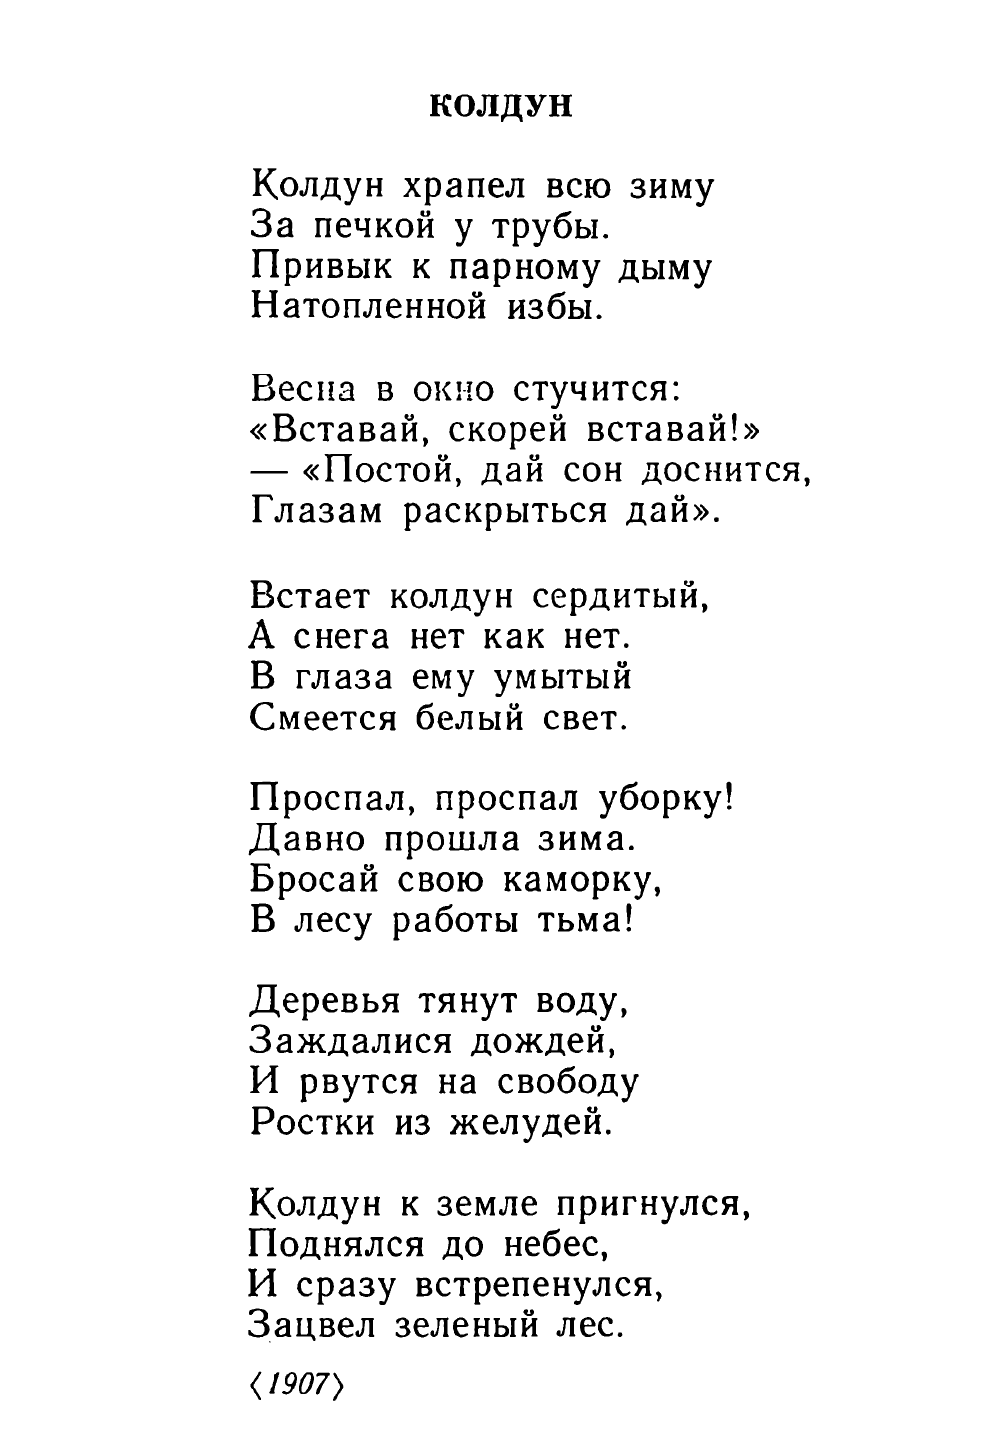 С. М. Городецкий. Колдун (1907)